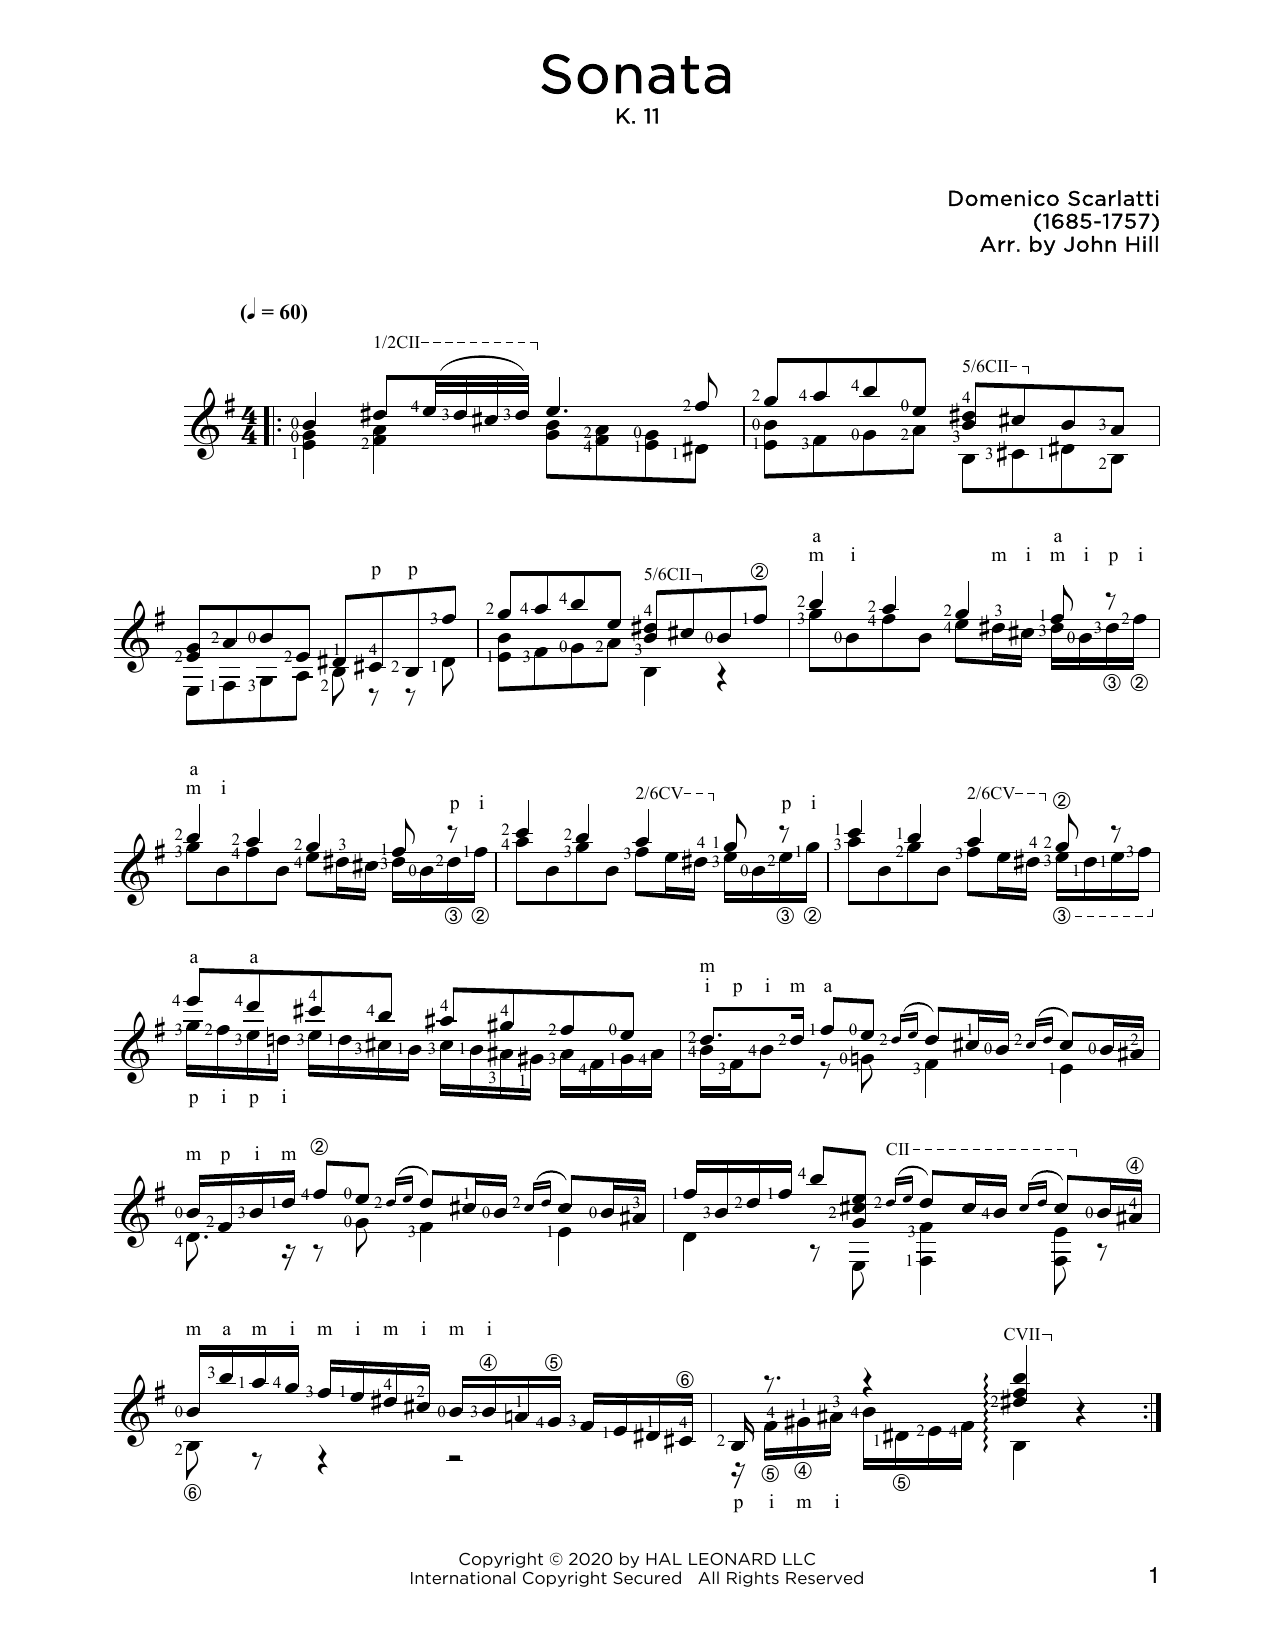 Download Domenico Scarlatti Sonata, L. 352 Sheet Music and learn how to play Solo Guitar PDF digital score in minutes